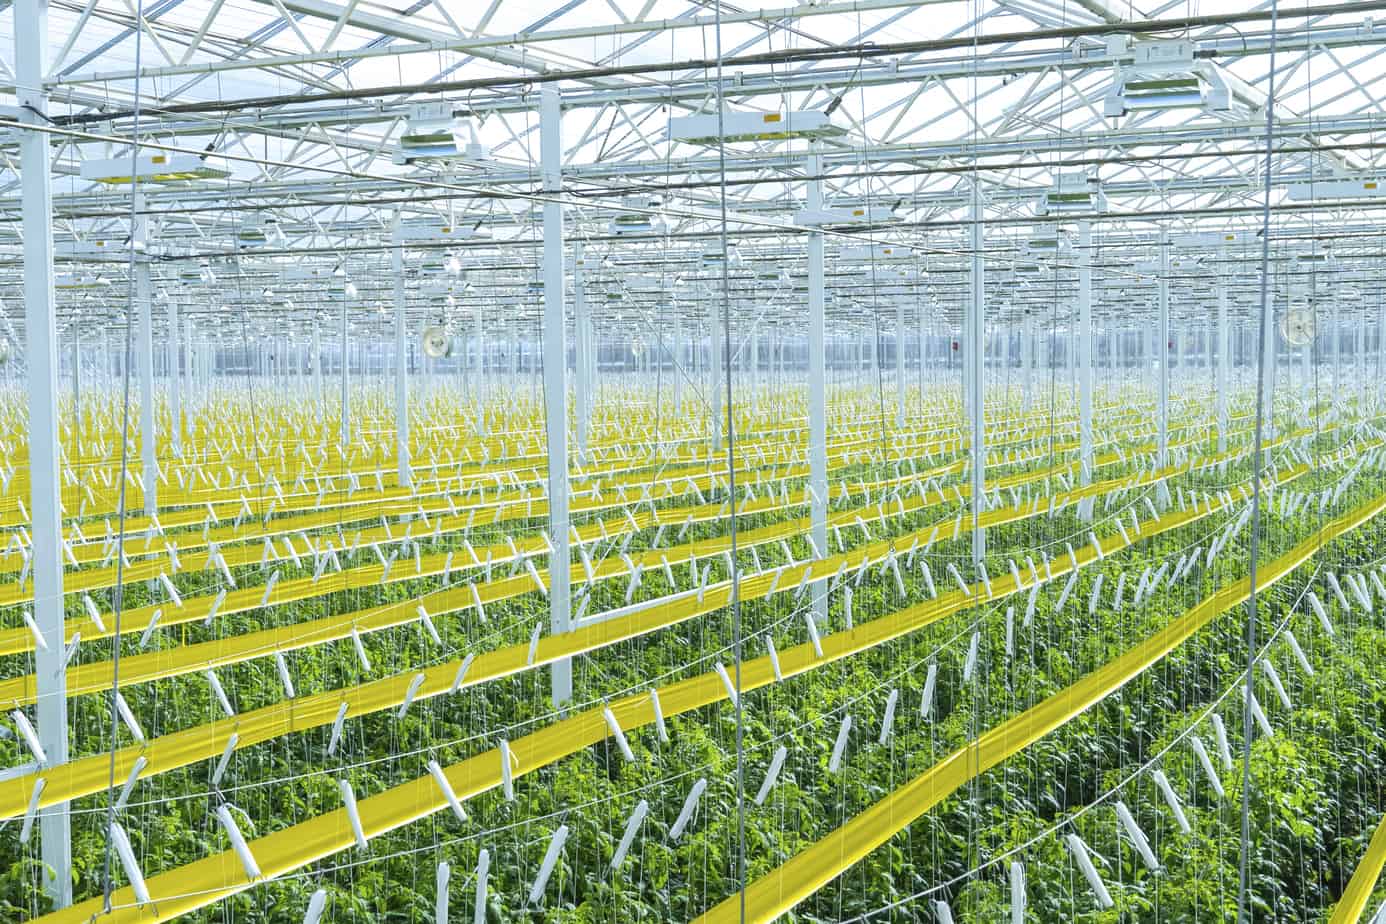 AppHarvest's high-tech indoor farms